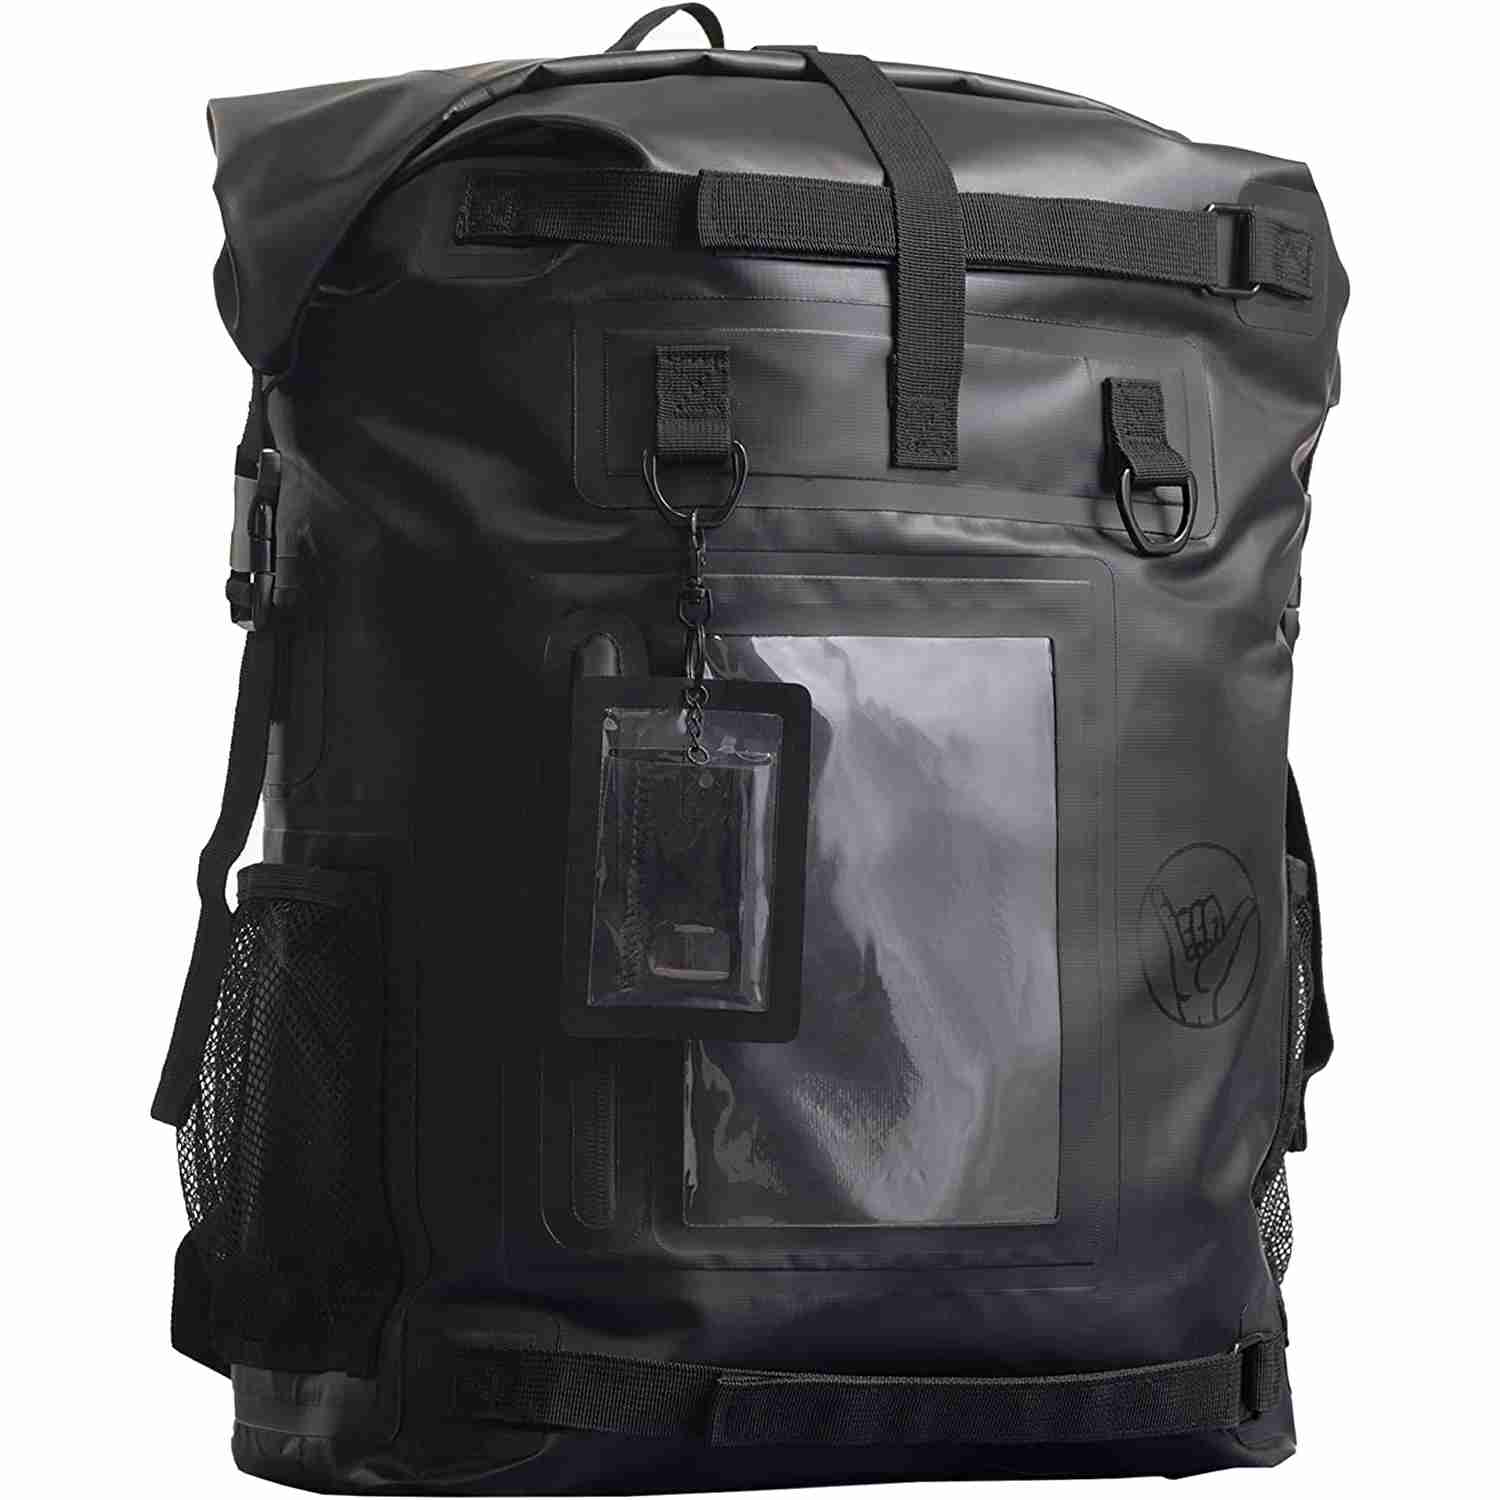 dry-bag-backpack for cheap